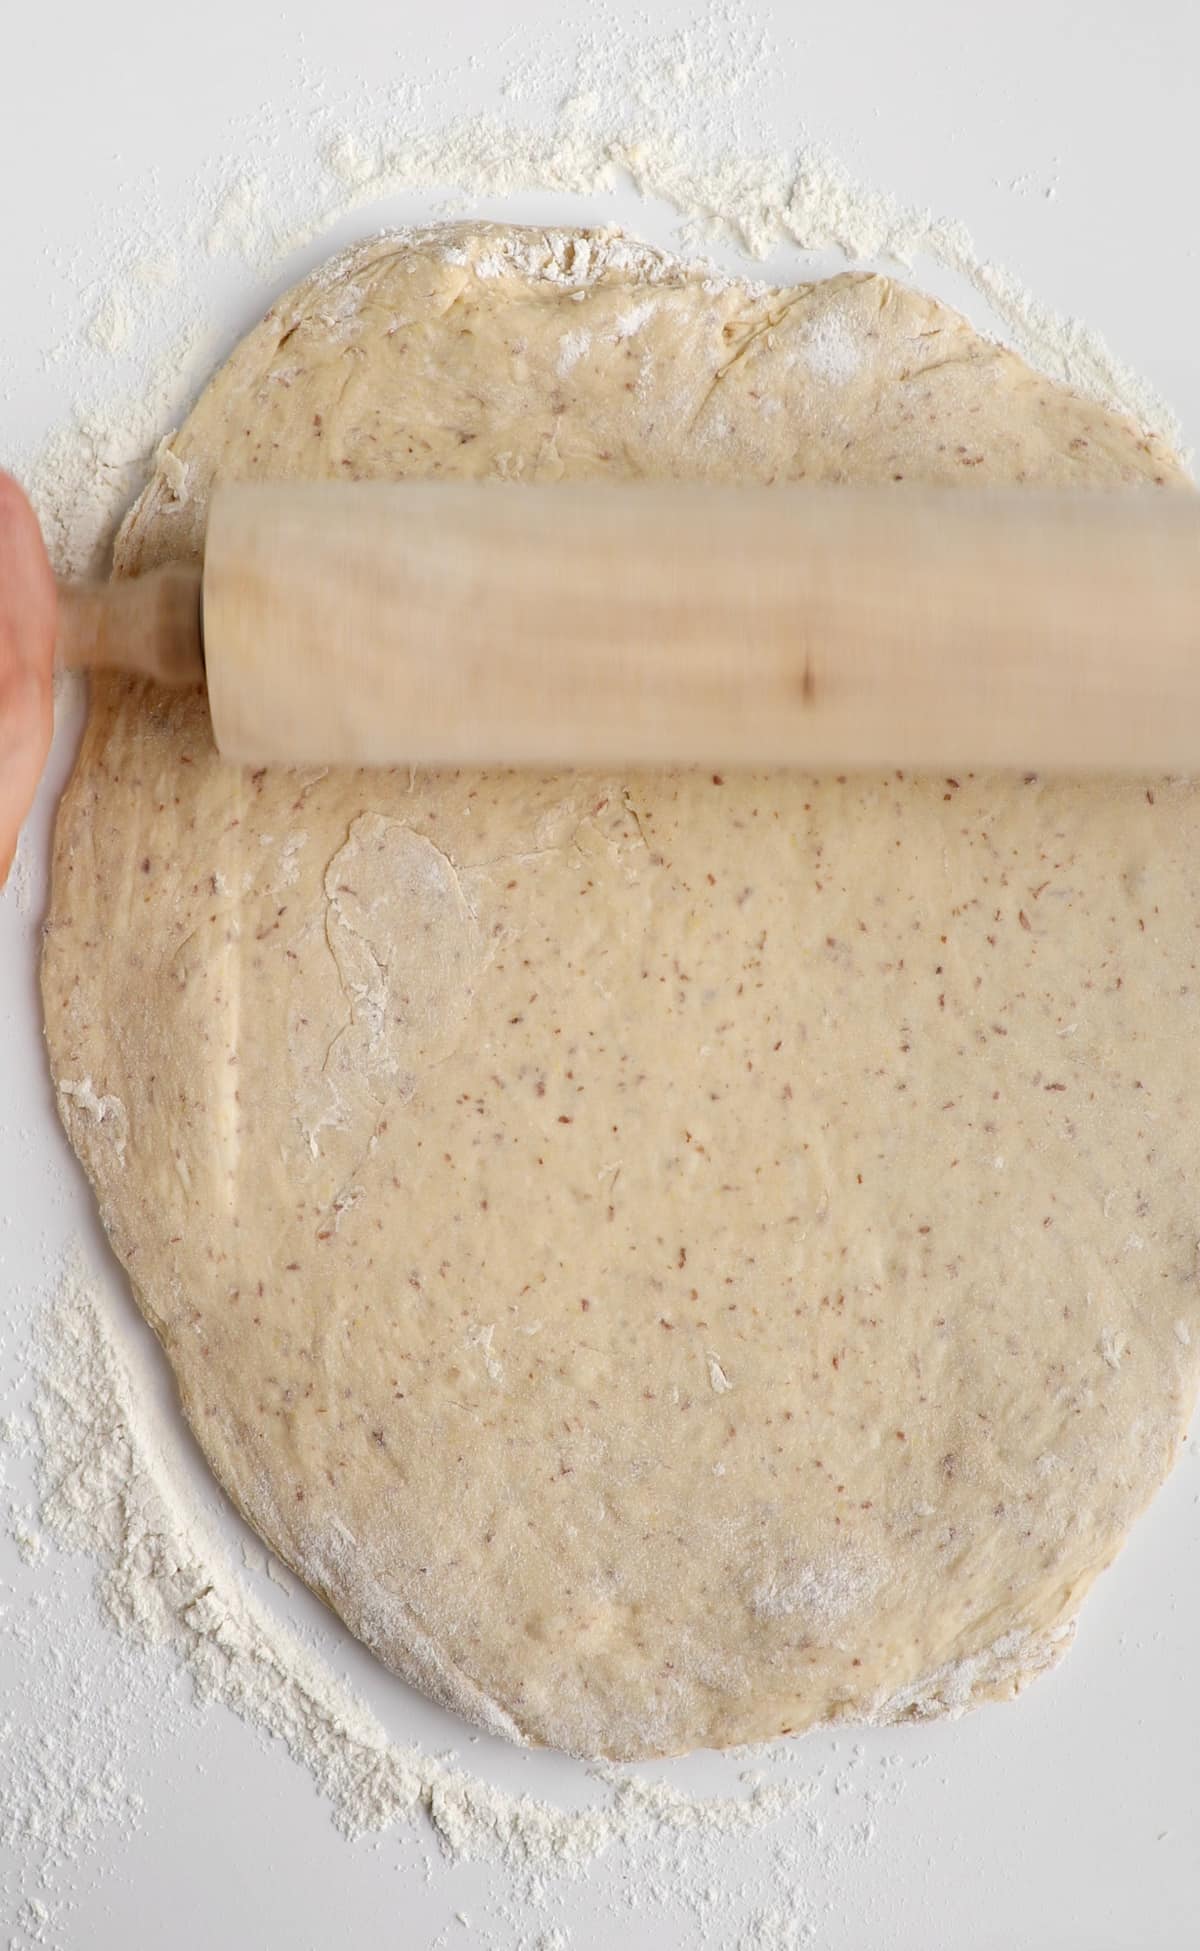 A rolling pin flattening out the vegan cinnamon roll dough.